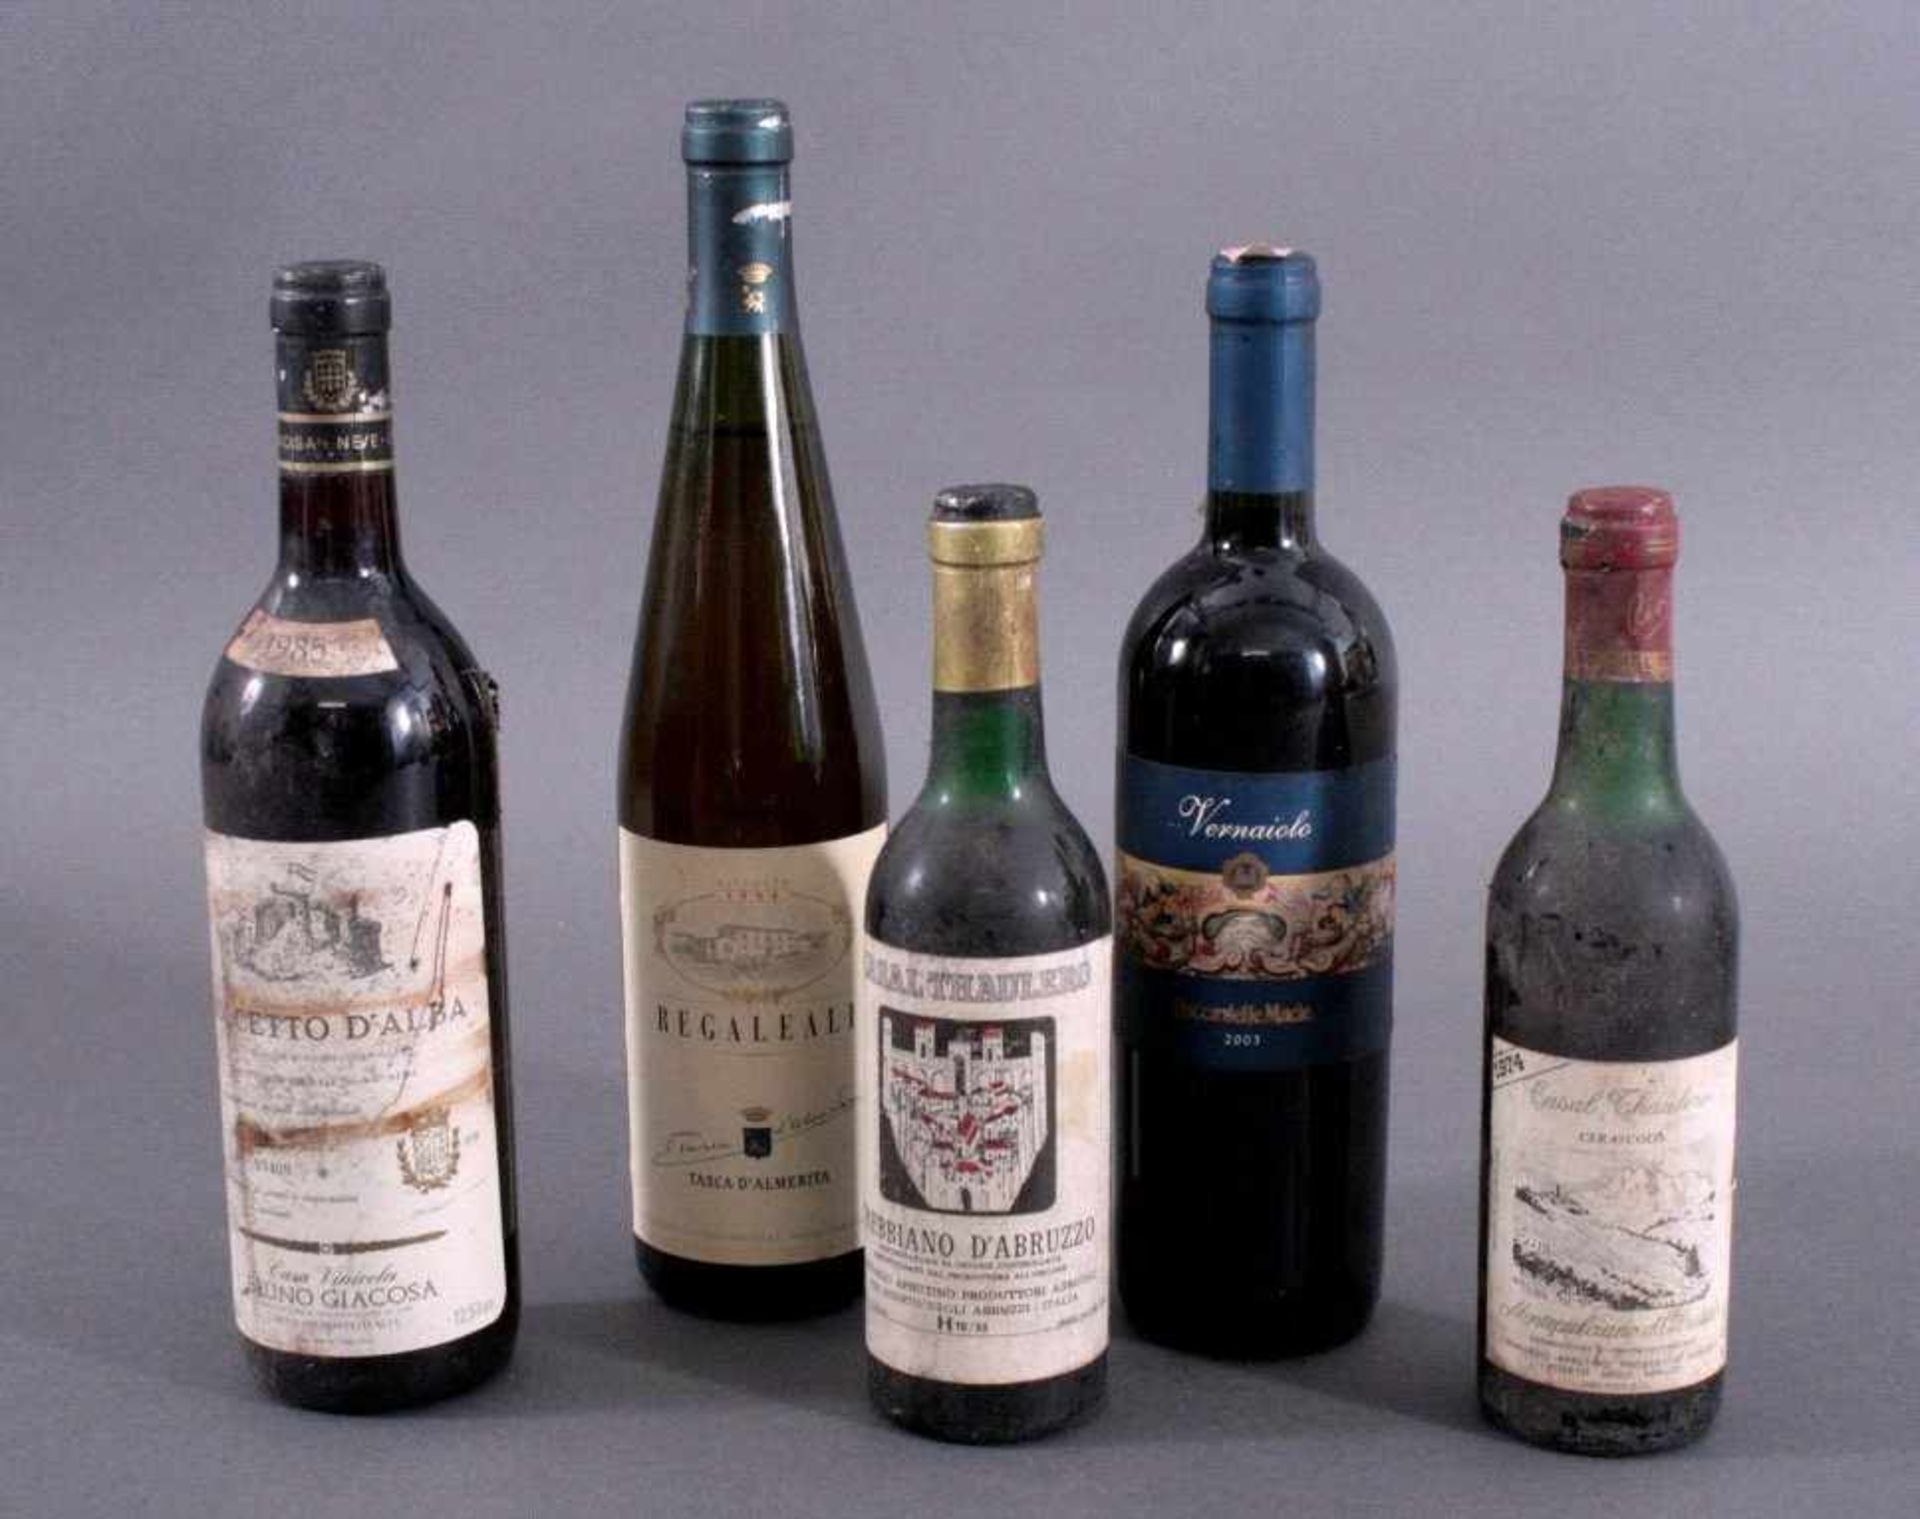 5 Flaschen Wein Italien1x Casal Thaulero Trebbiano d'Abbruzo.1x Regaleali Tasca d'Almerita 1994.1x